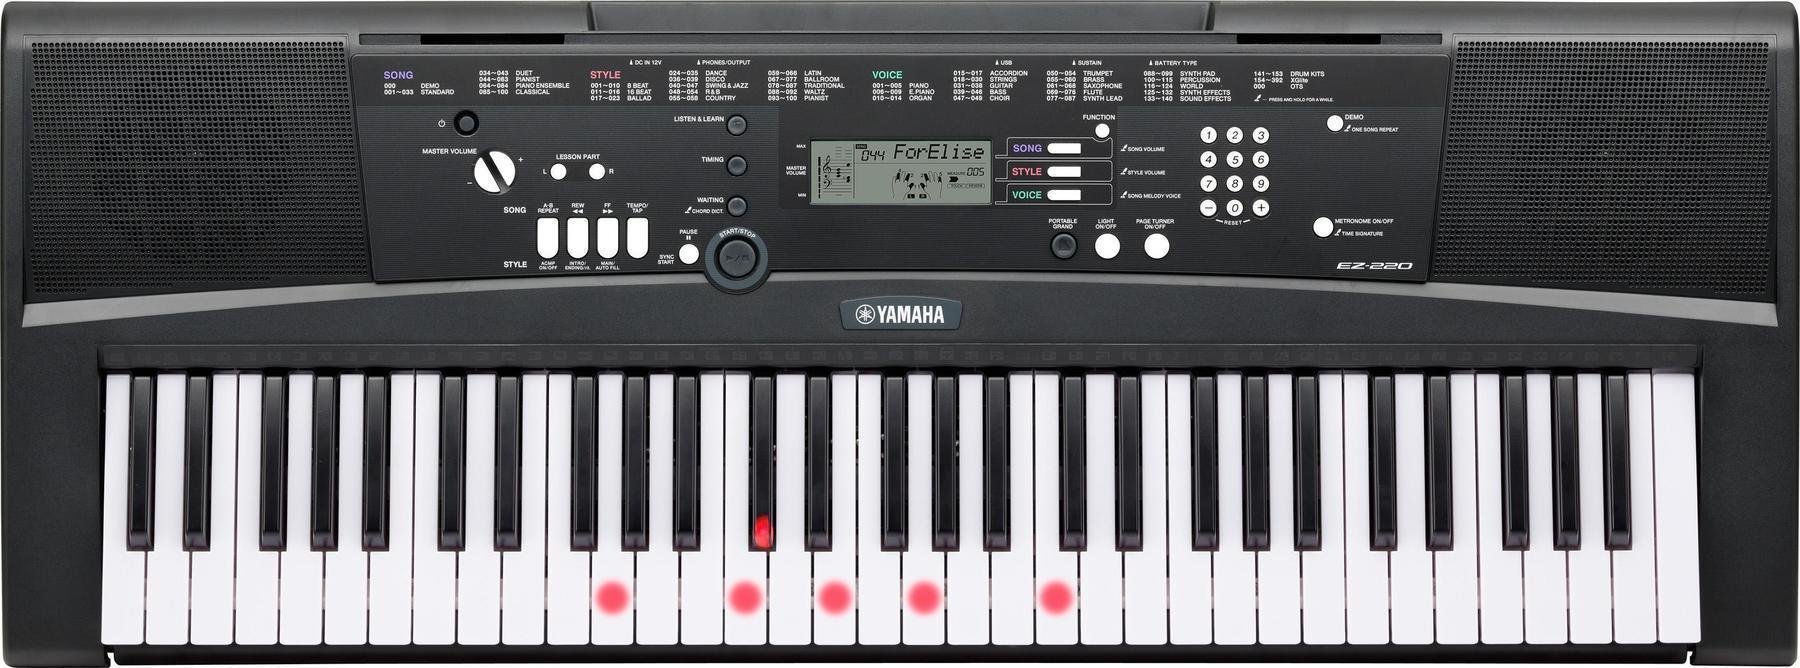 Keyboard with Touch Response Yamaha EZ 220